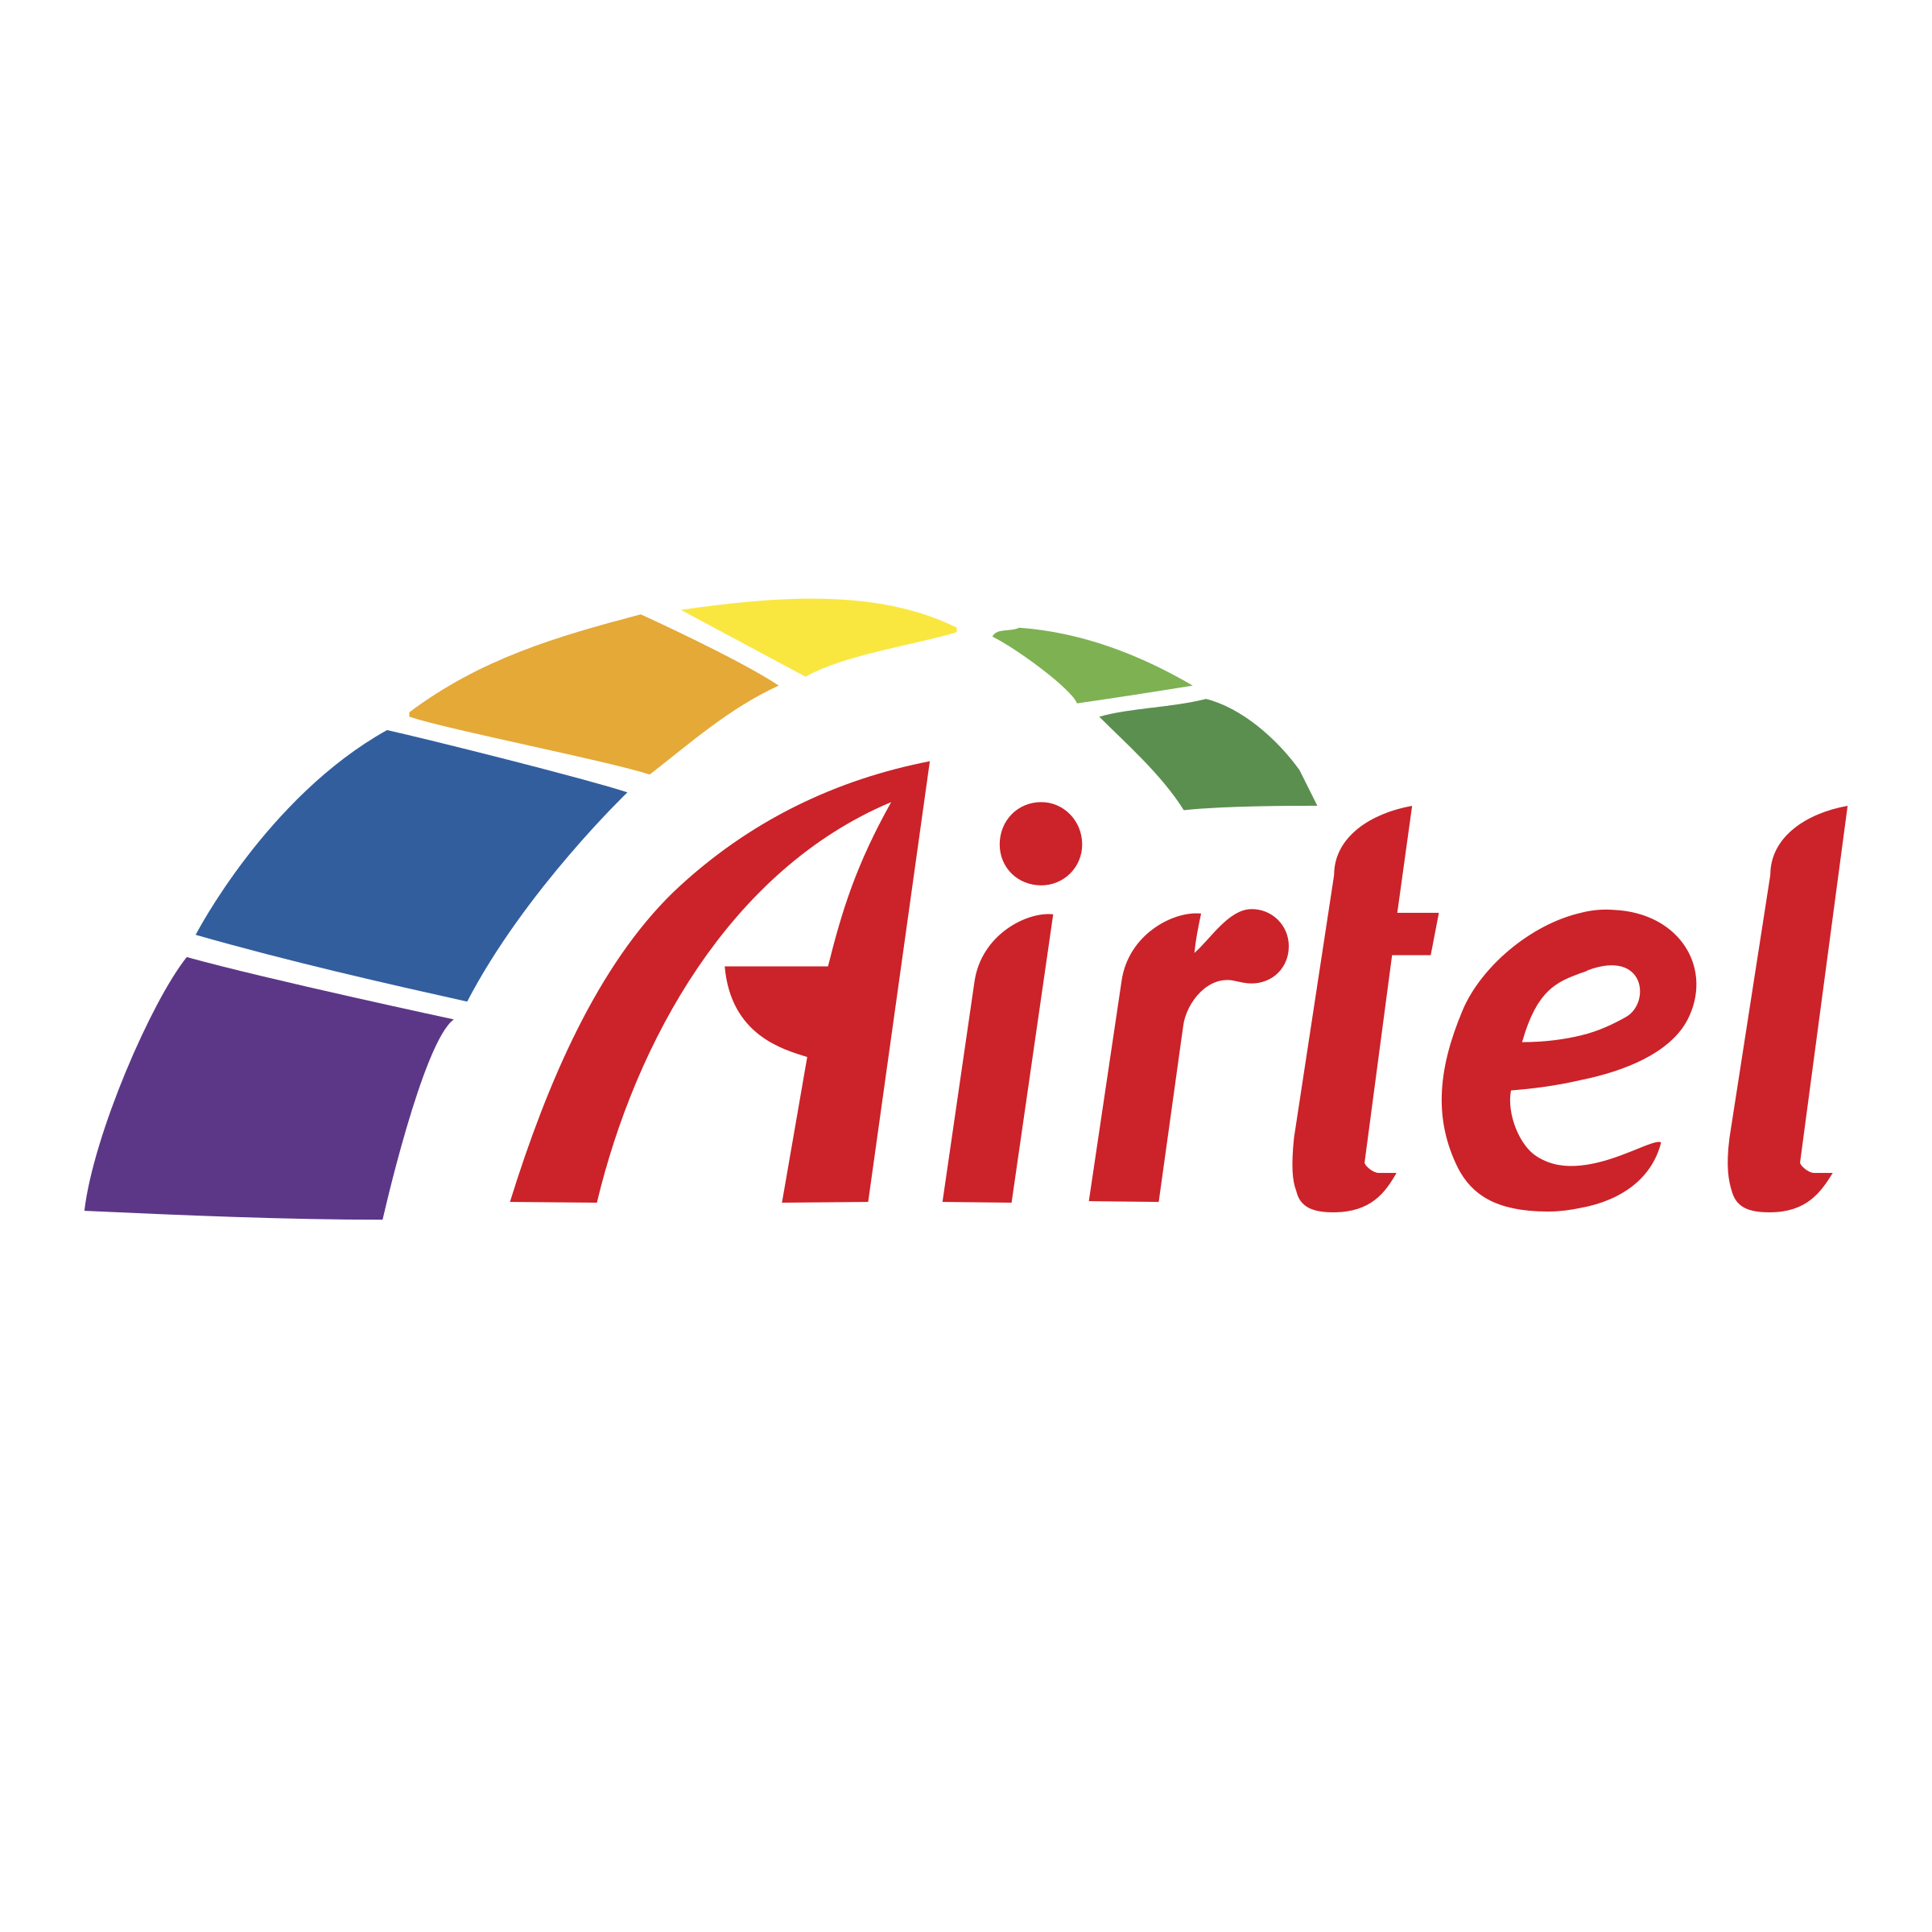 Airtel Logo - Airtel 01 Logo PNG Transparent & SVG Vector - Freebie Supply